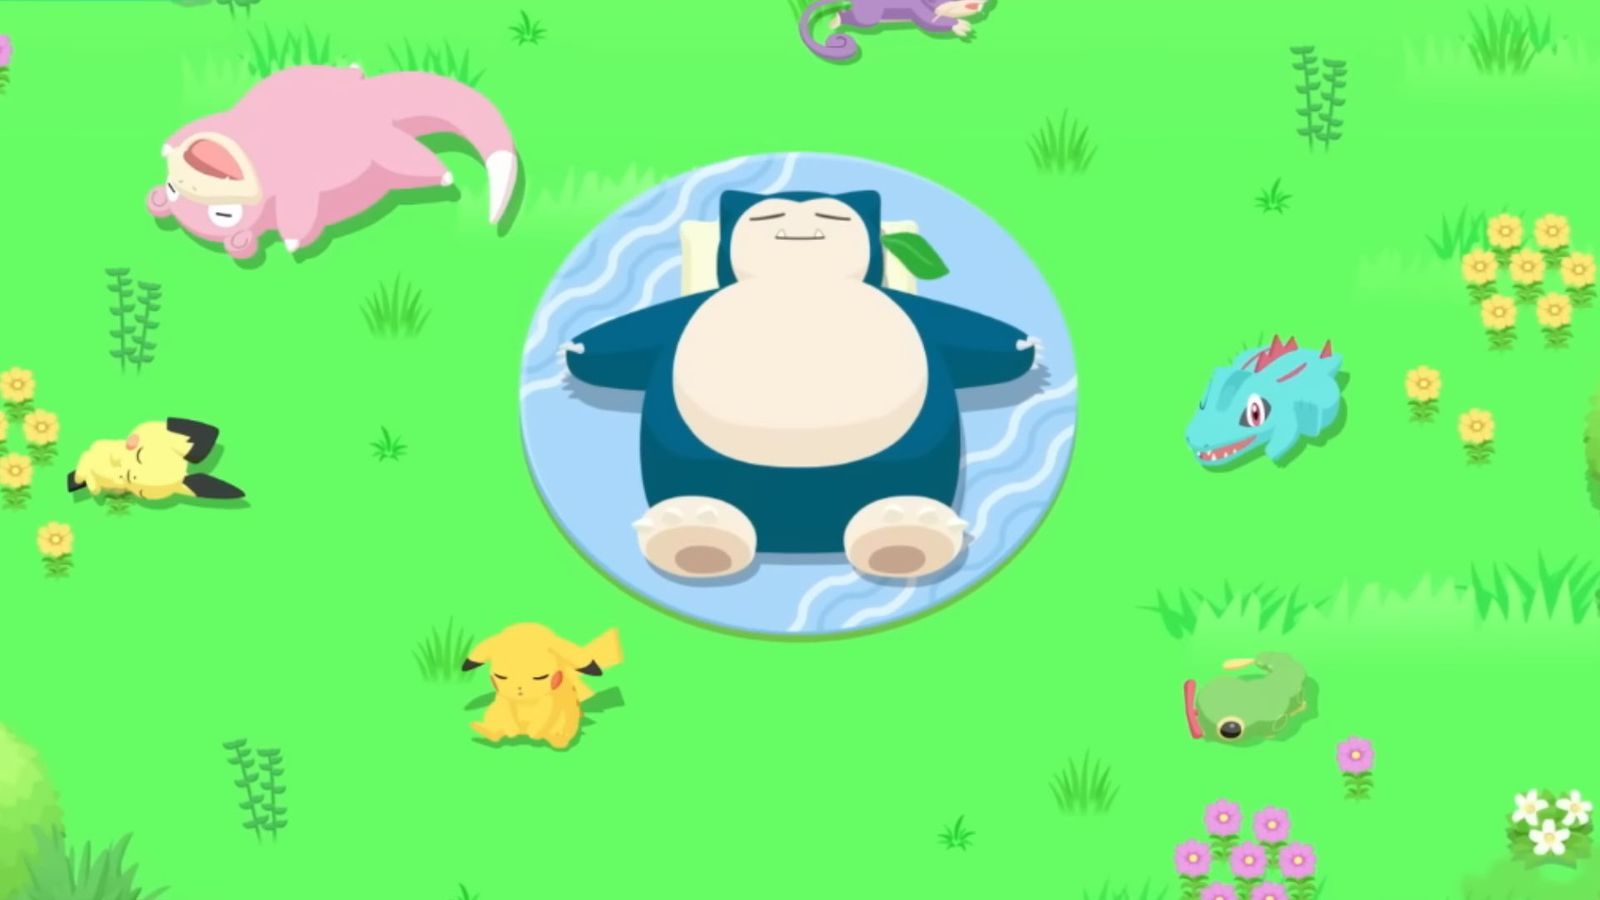 A screenshot of Snorlax from the Pokemon Sleep trailer. 